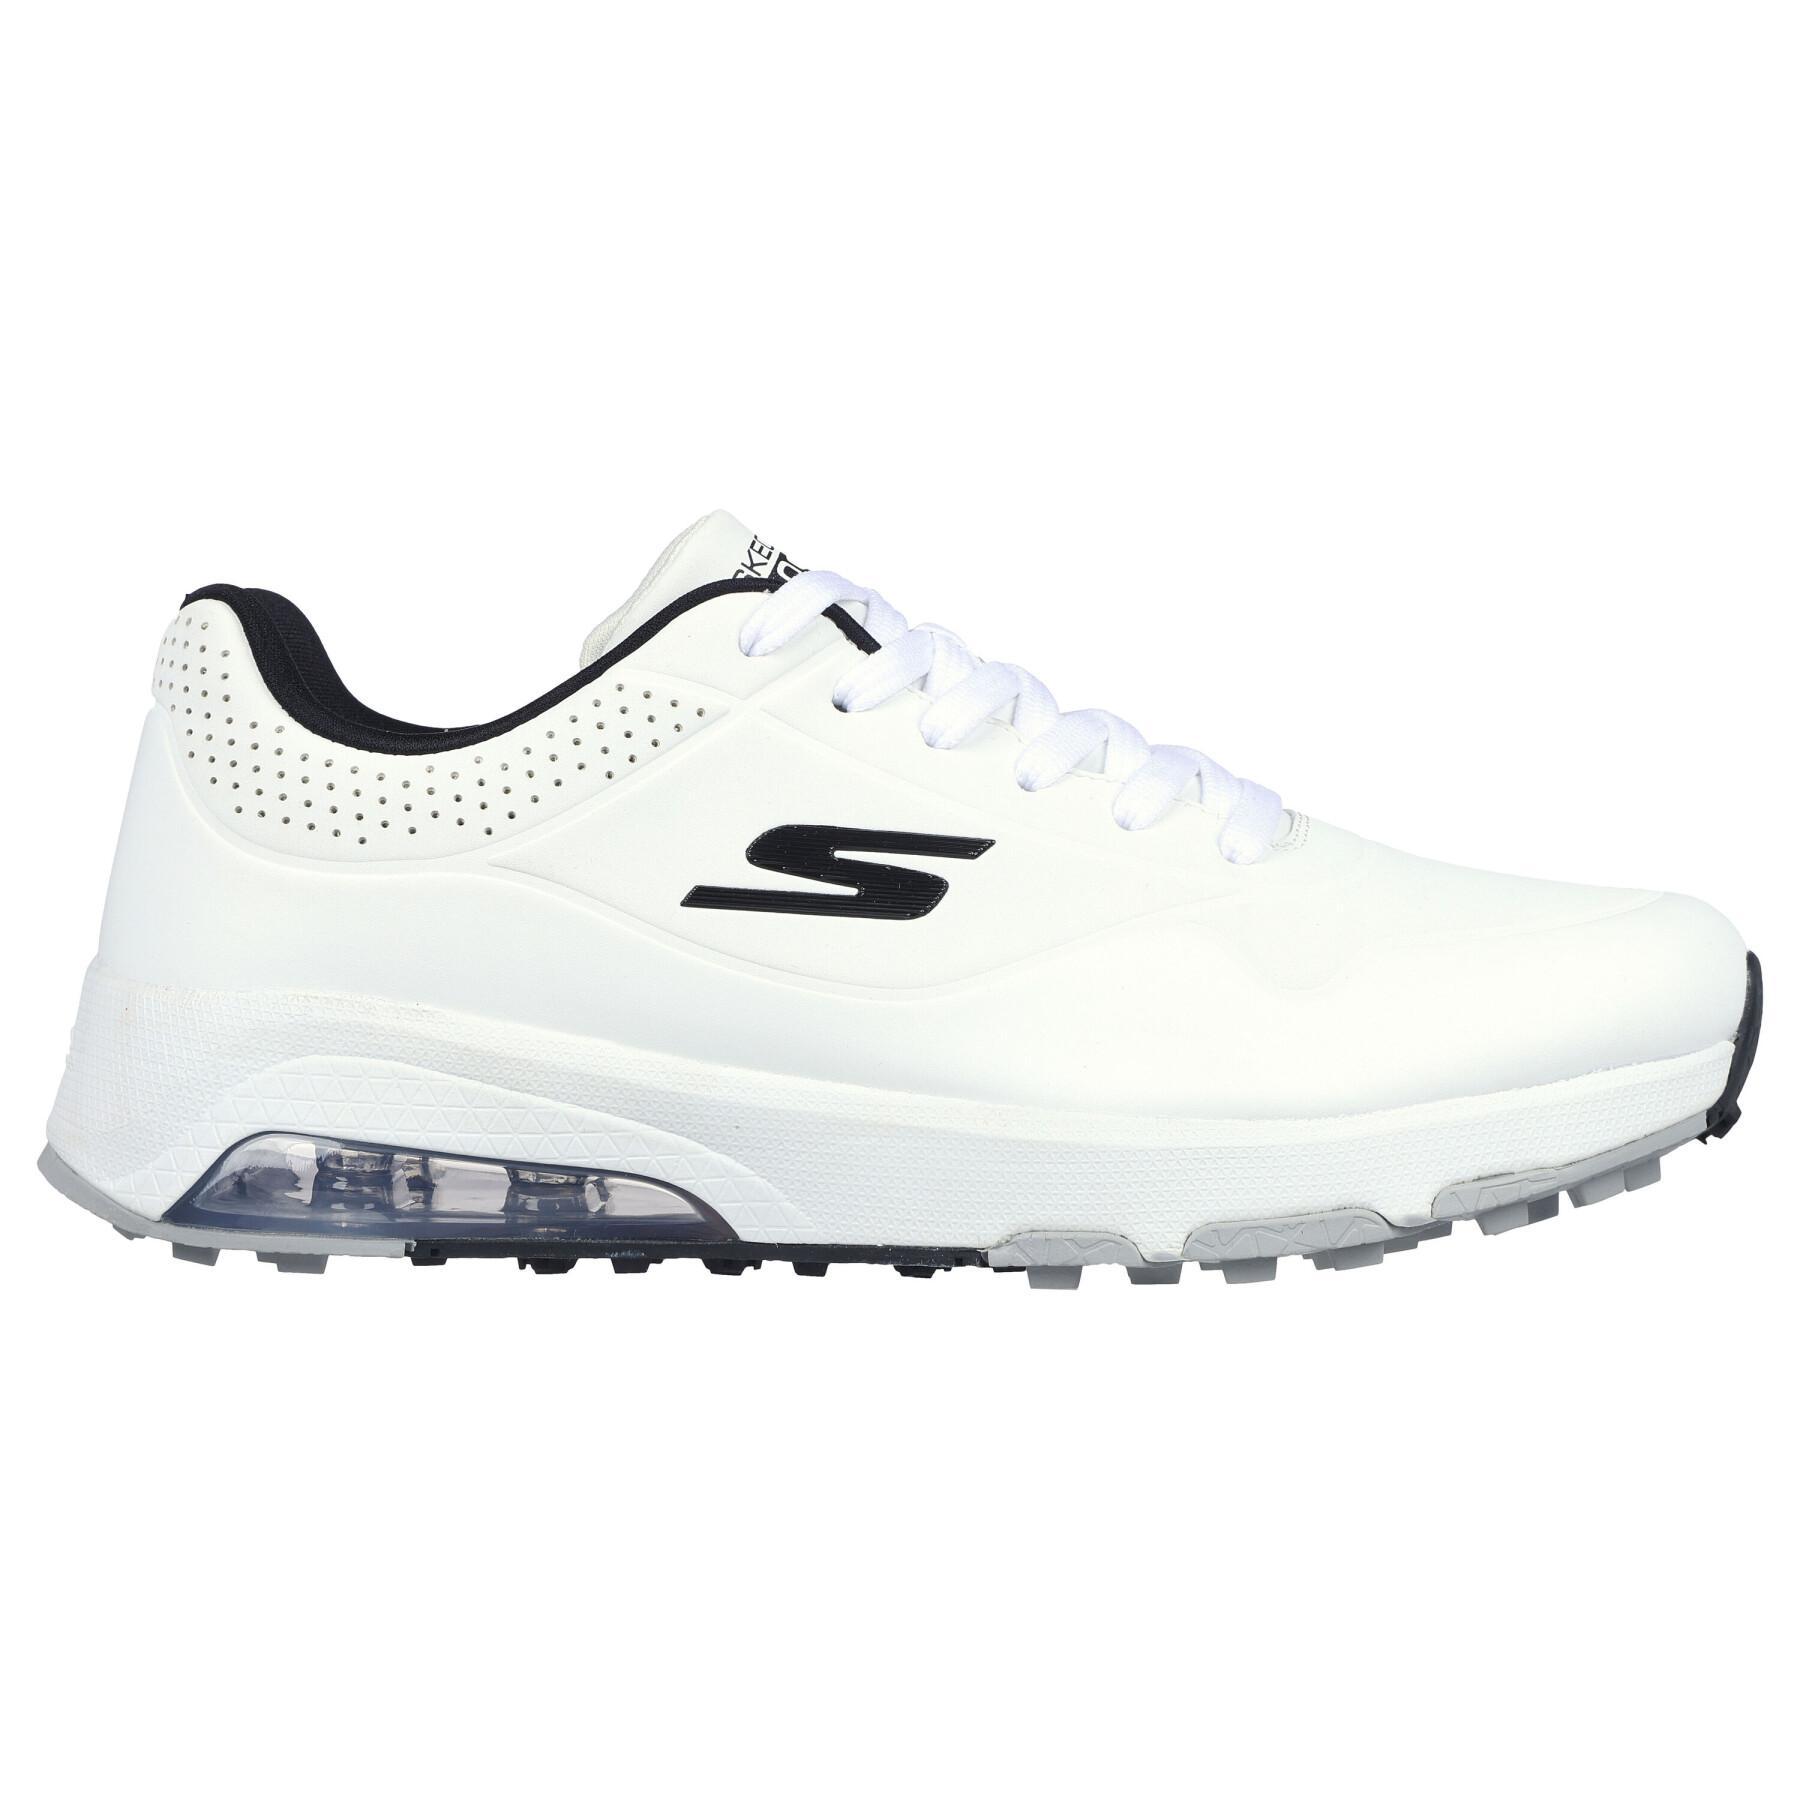 Zapatos de golf sin clavos Skechers GO GOLF Skech-Air - Dos